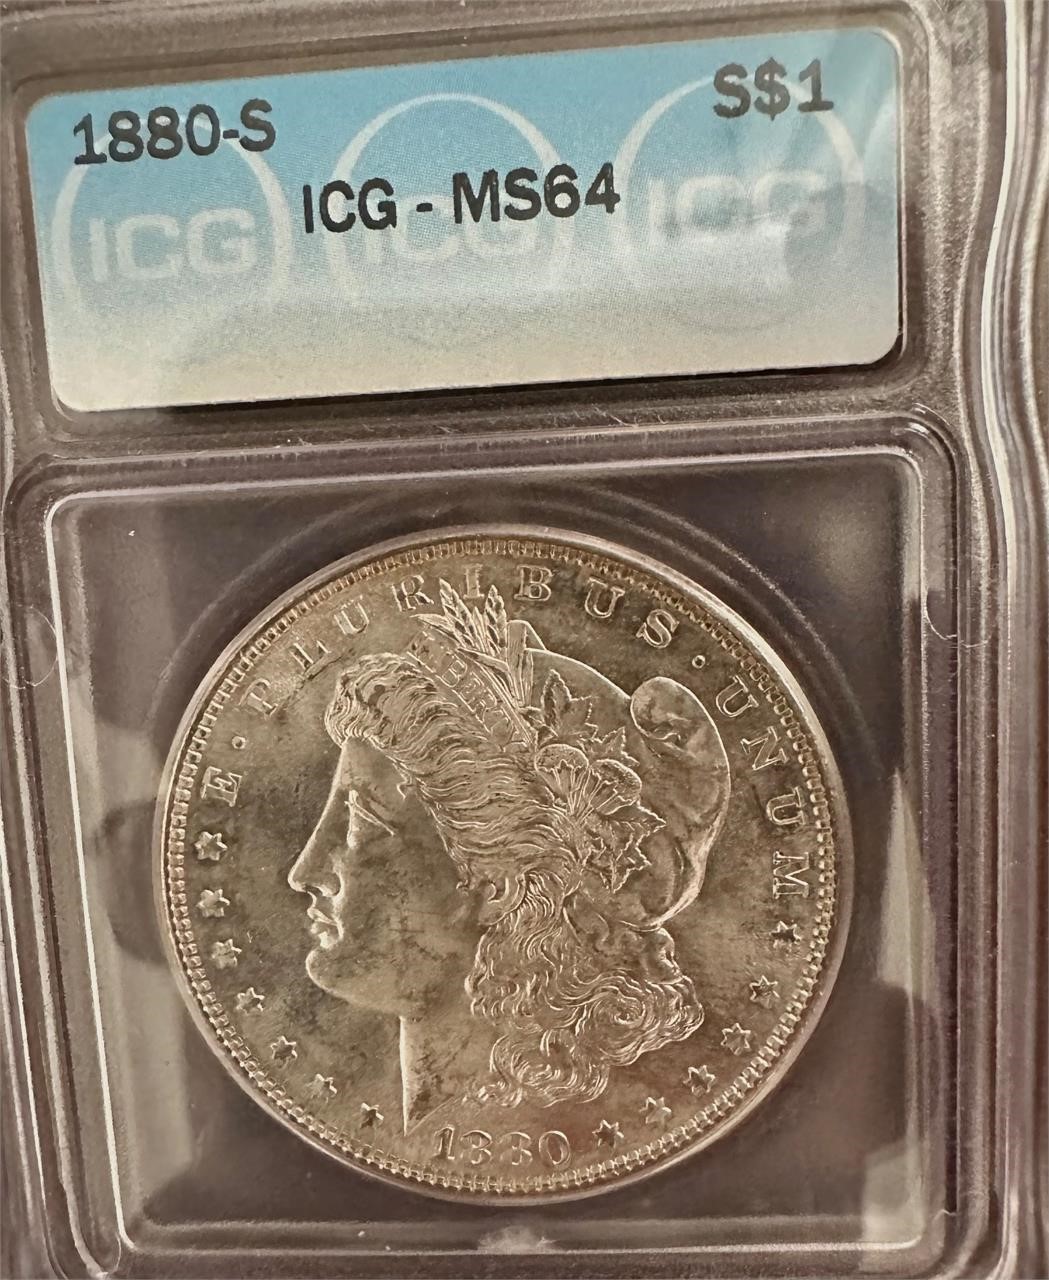 Rare Coin Auction 5 - North Texas